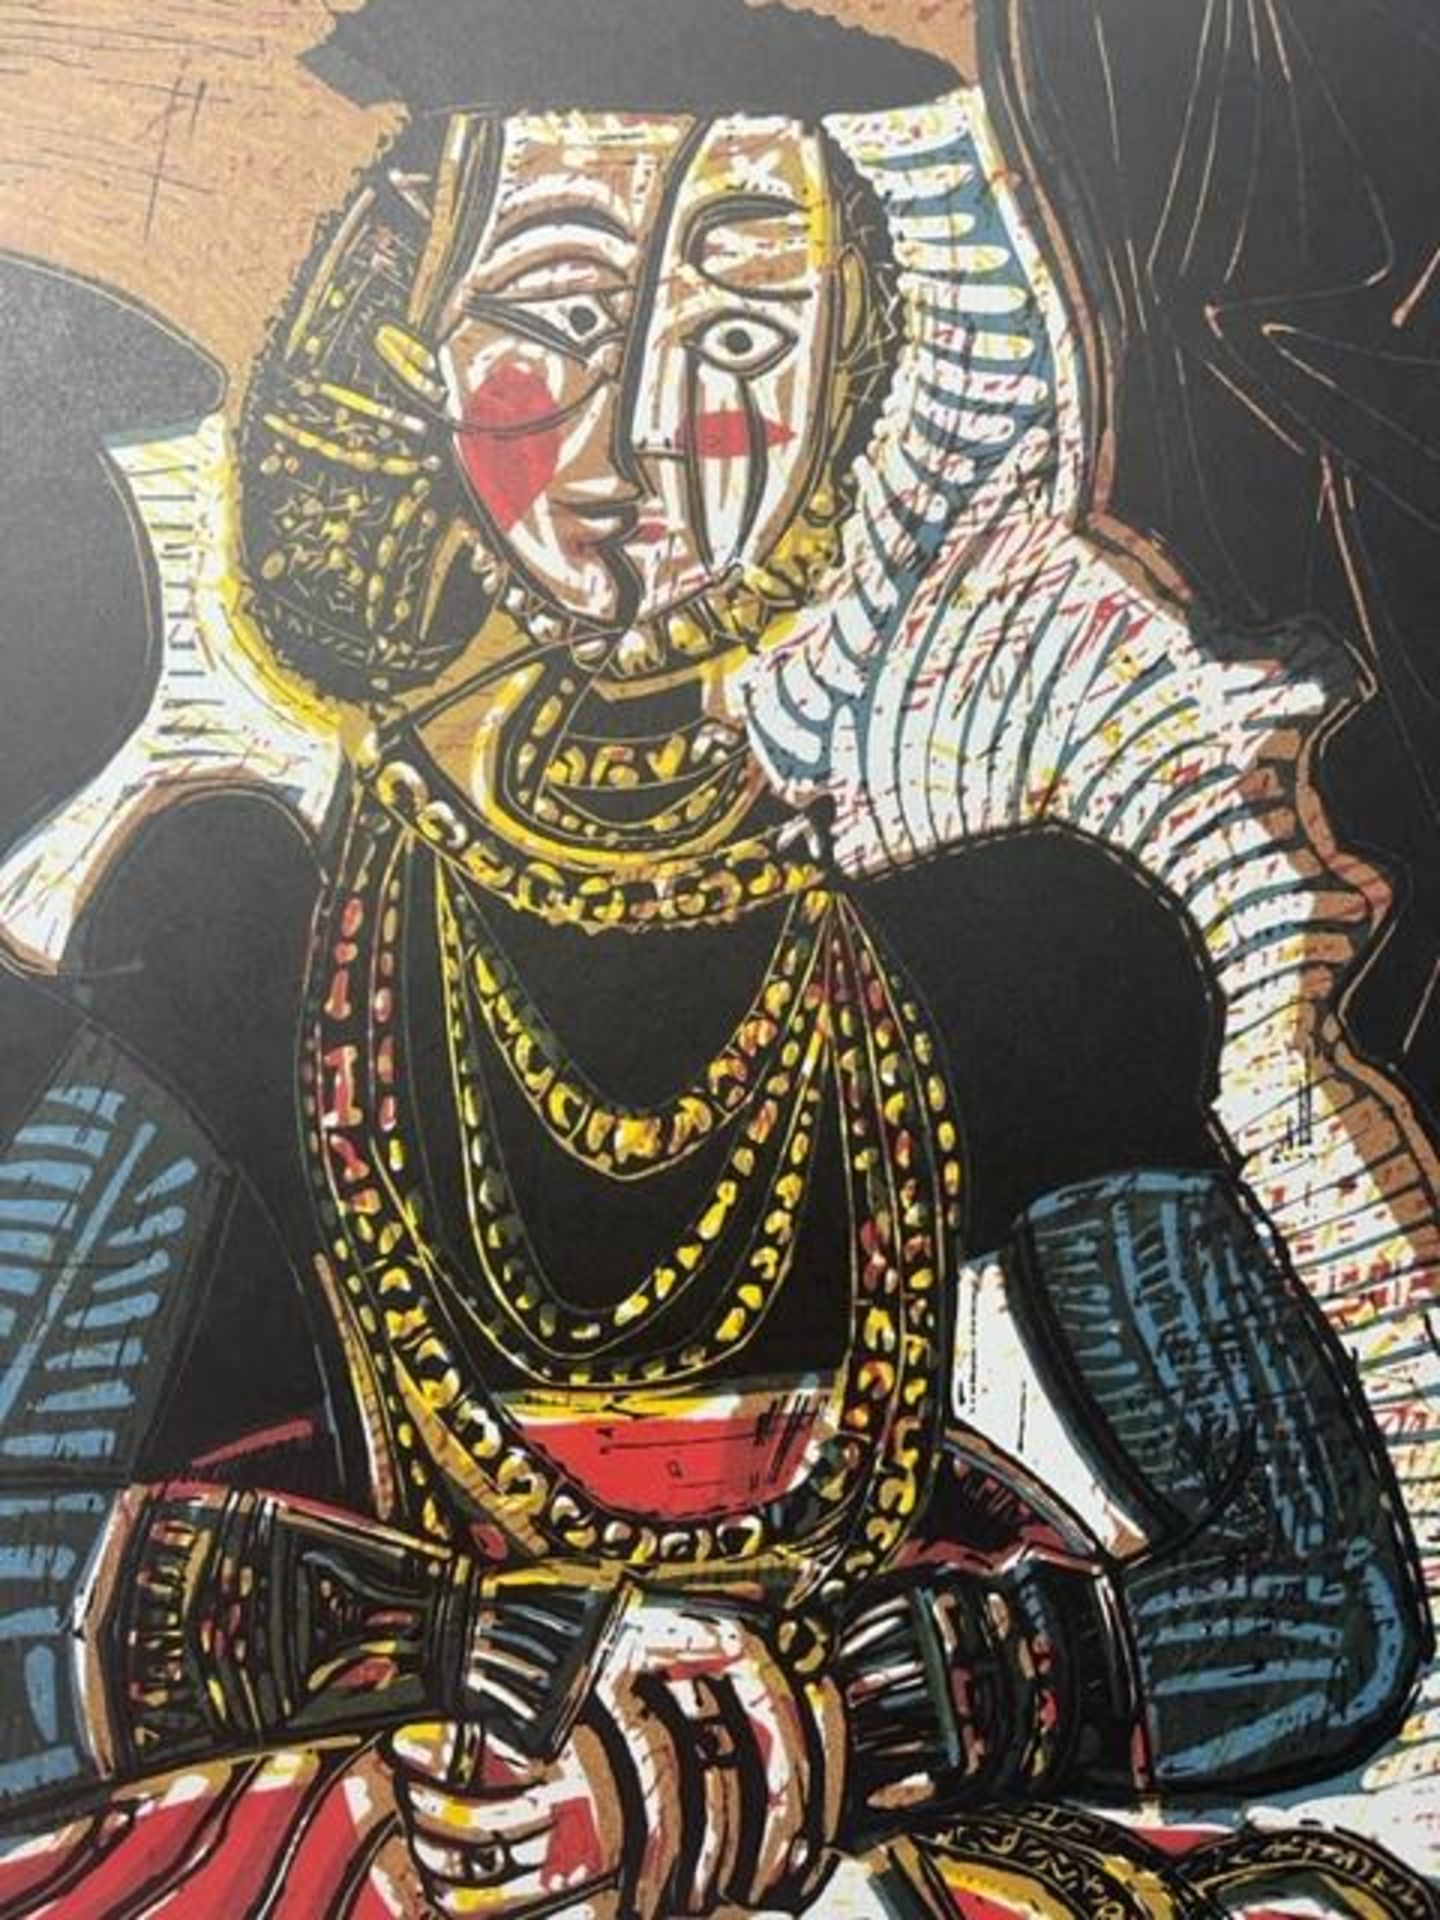 Pablo Picasso "Portrait of a Lady" Print. - Image 2 of 6